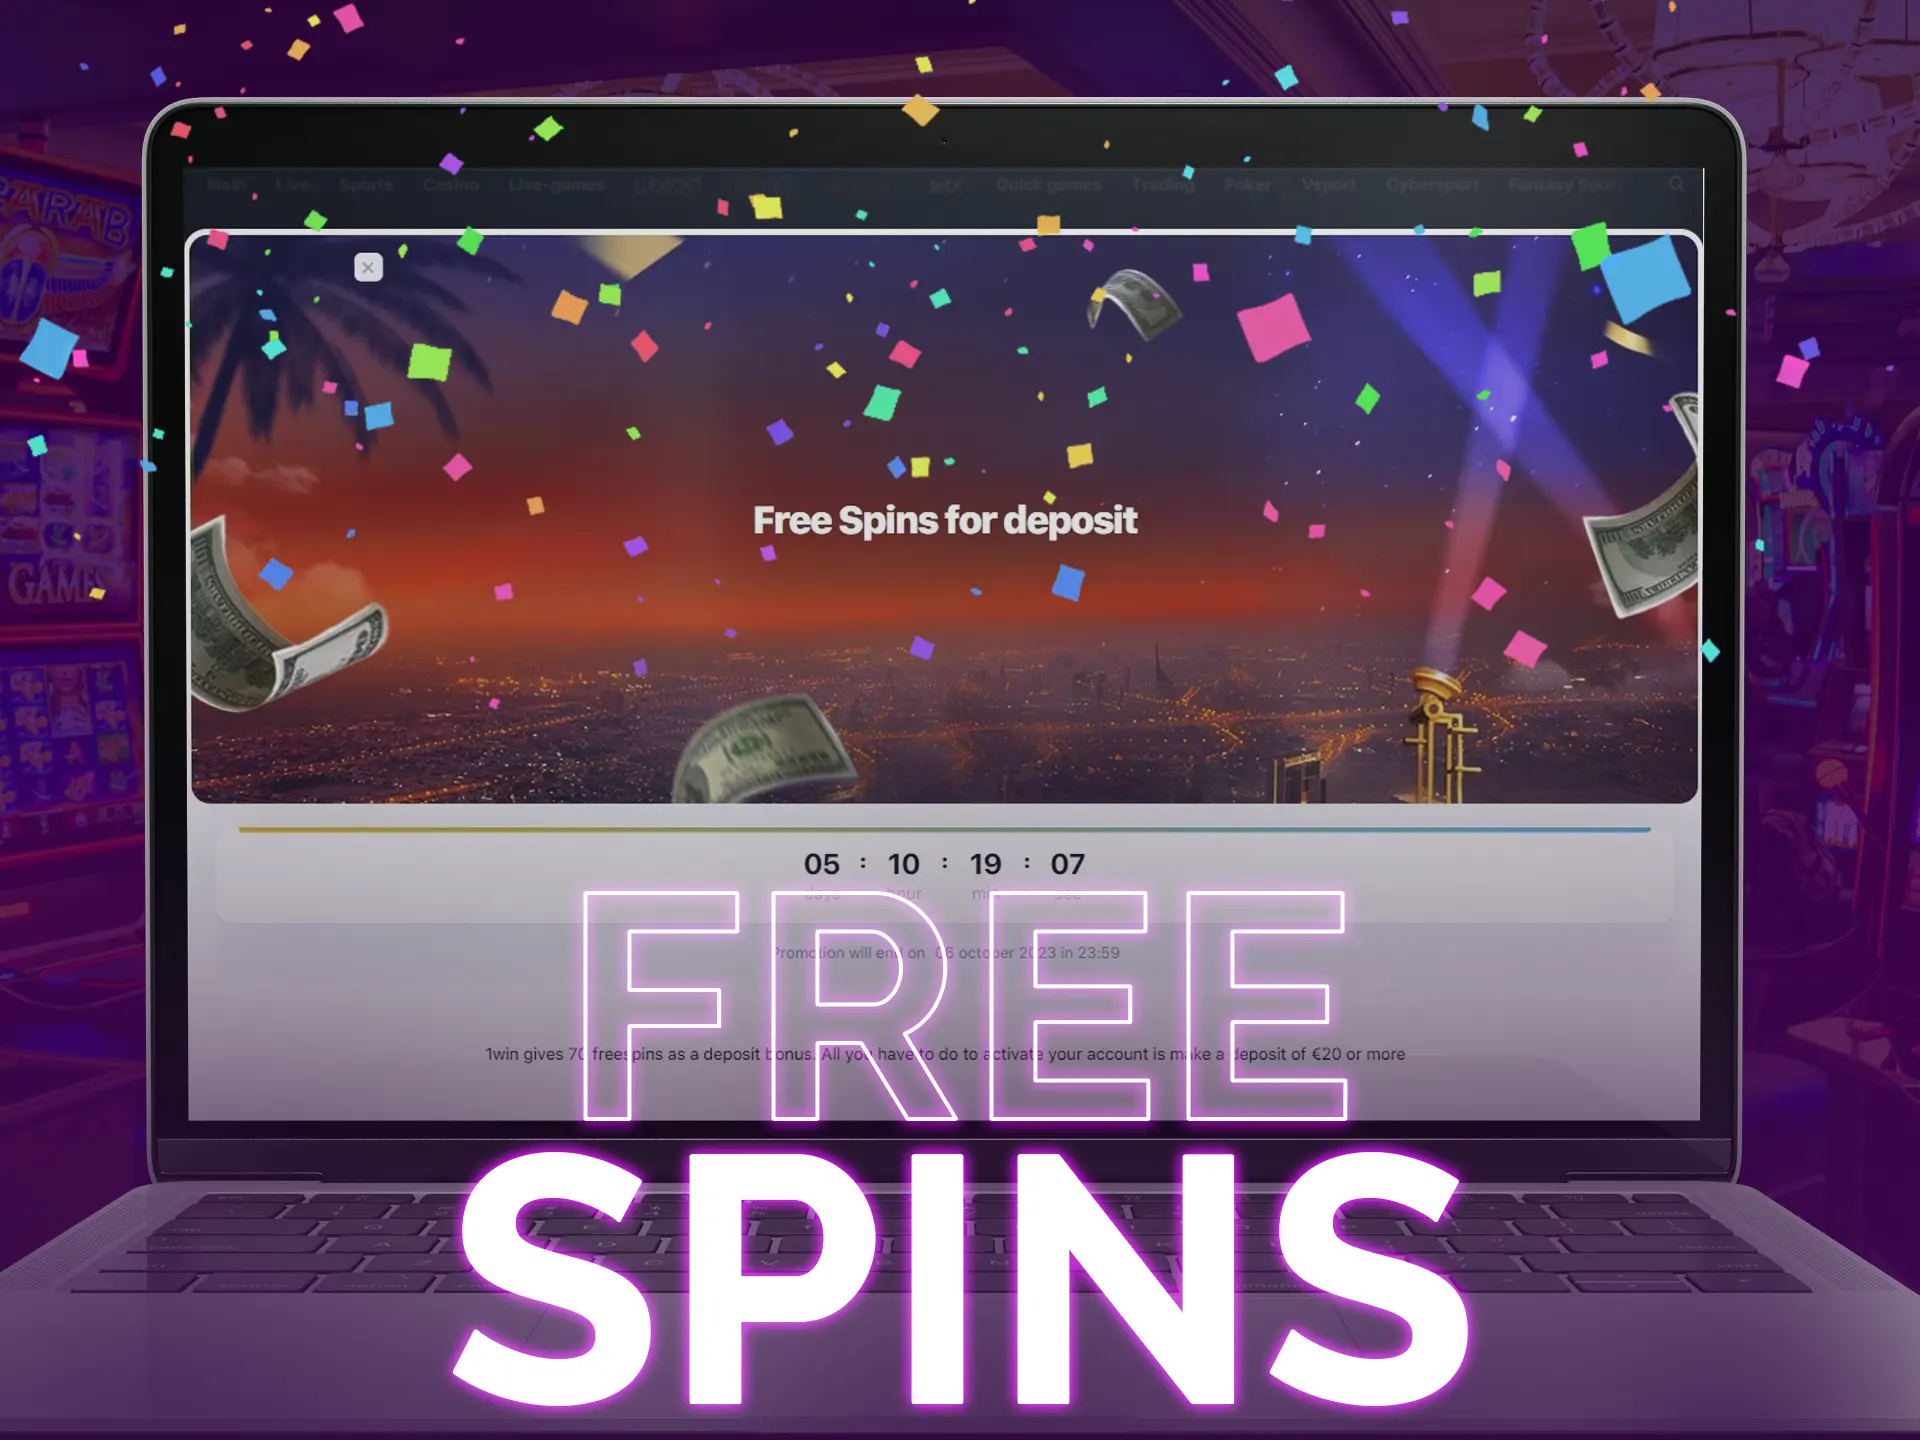 Casinos offering free spins bonuses for slots.